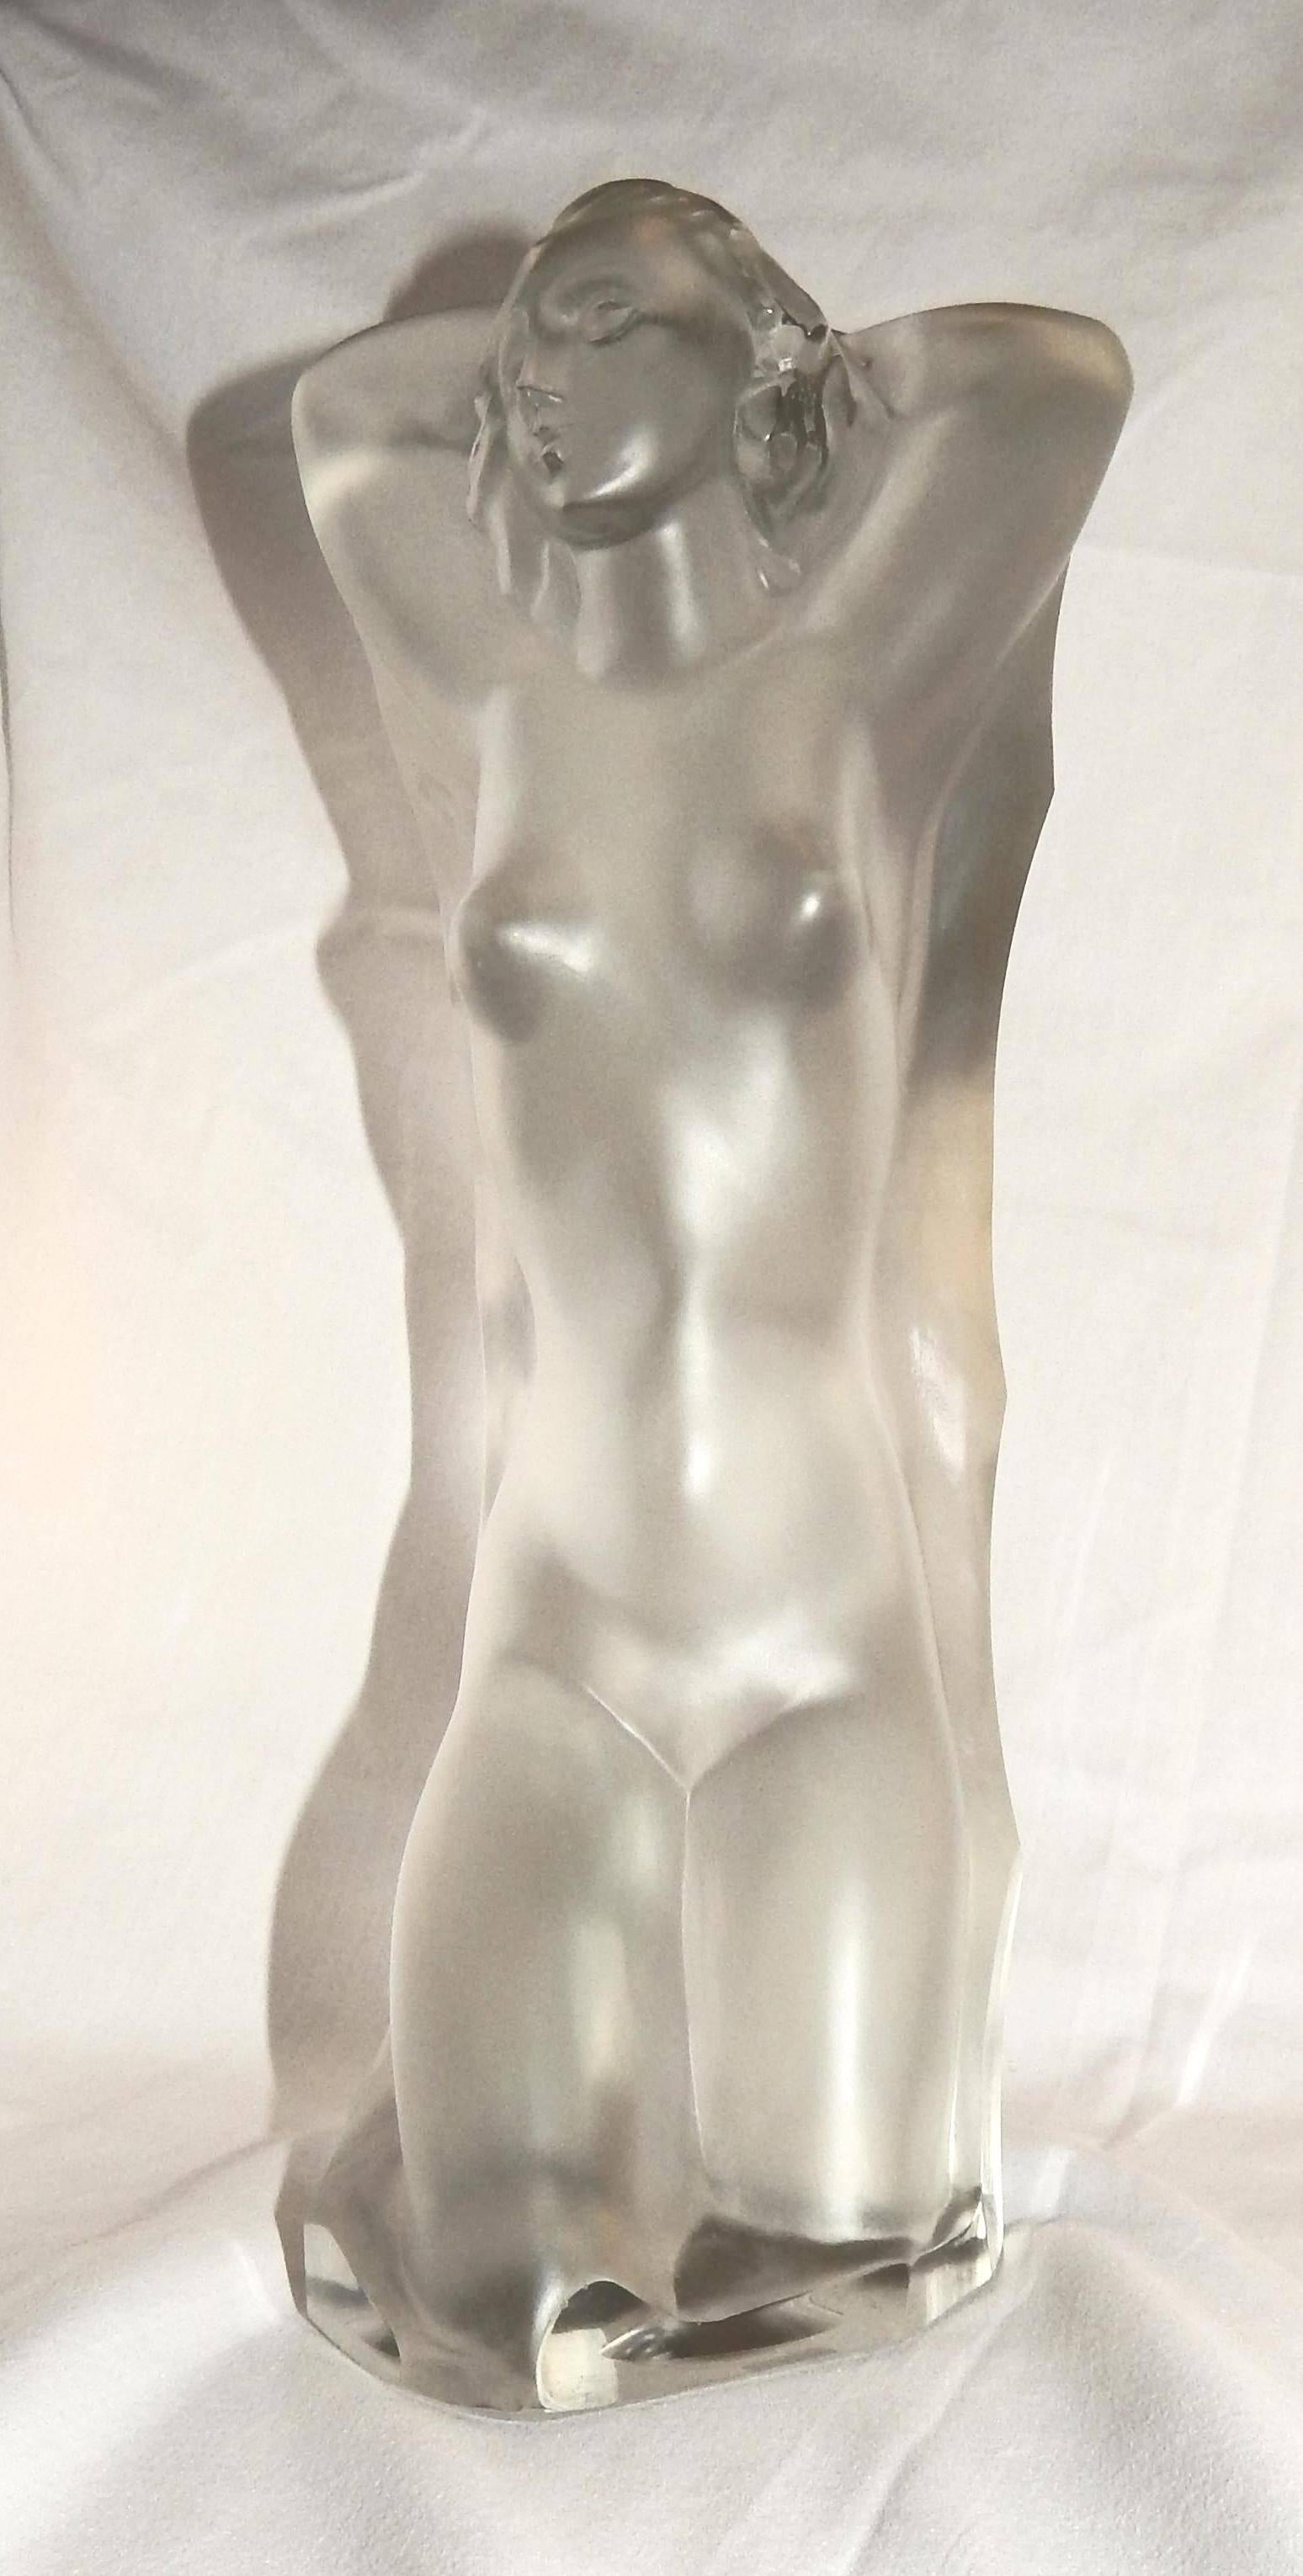 Ena Rottenberg (1893-1952) art glass sculpture titled 